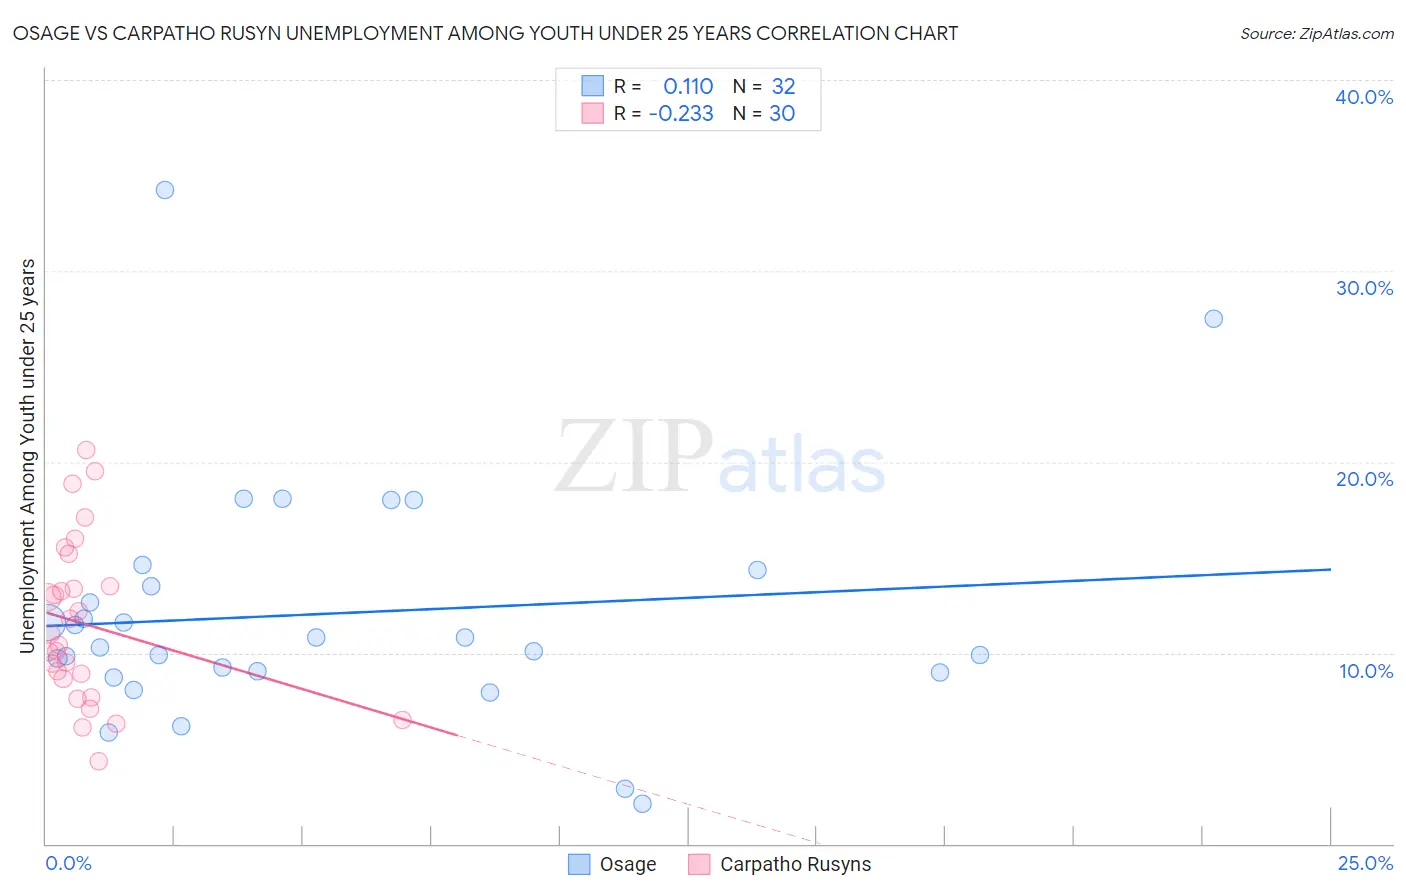 Osage vs Carpatho Rusyn Unemployment Among Youth under 25 years